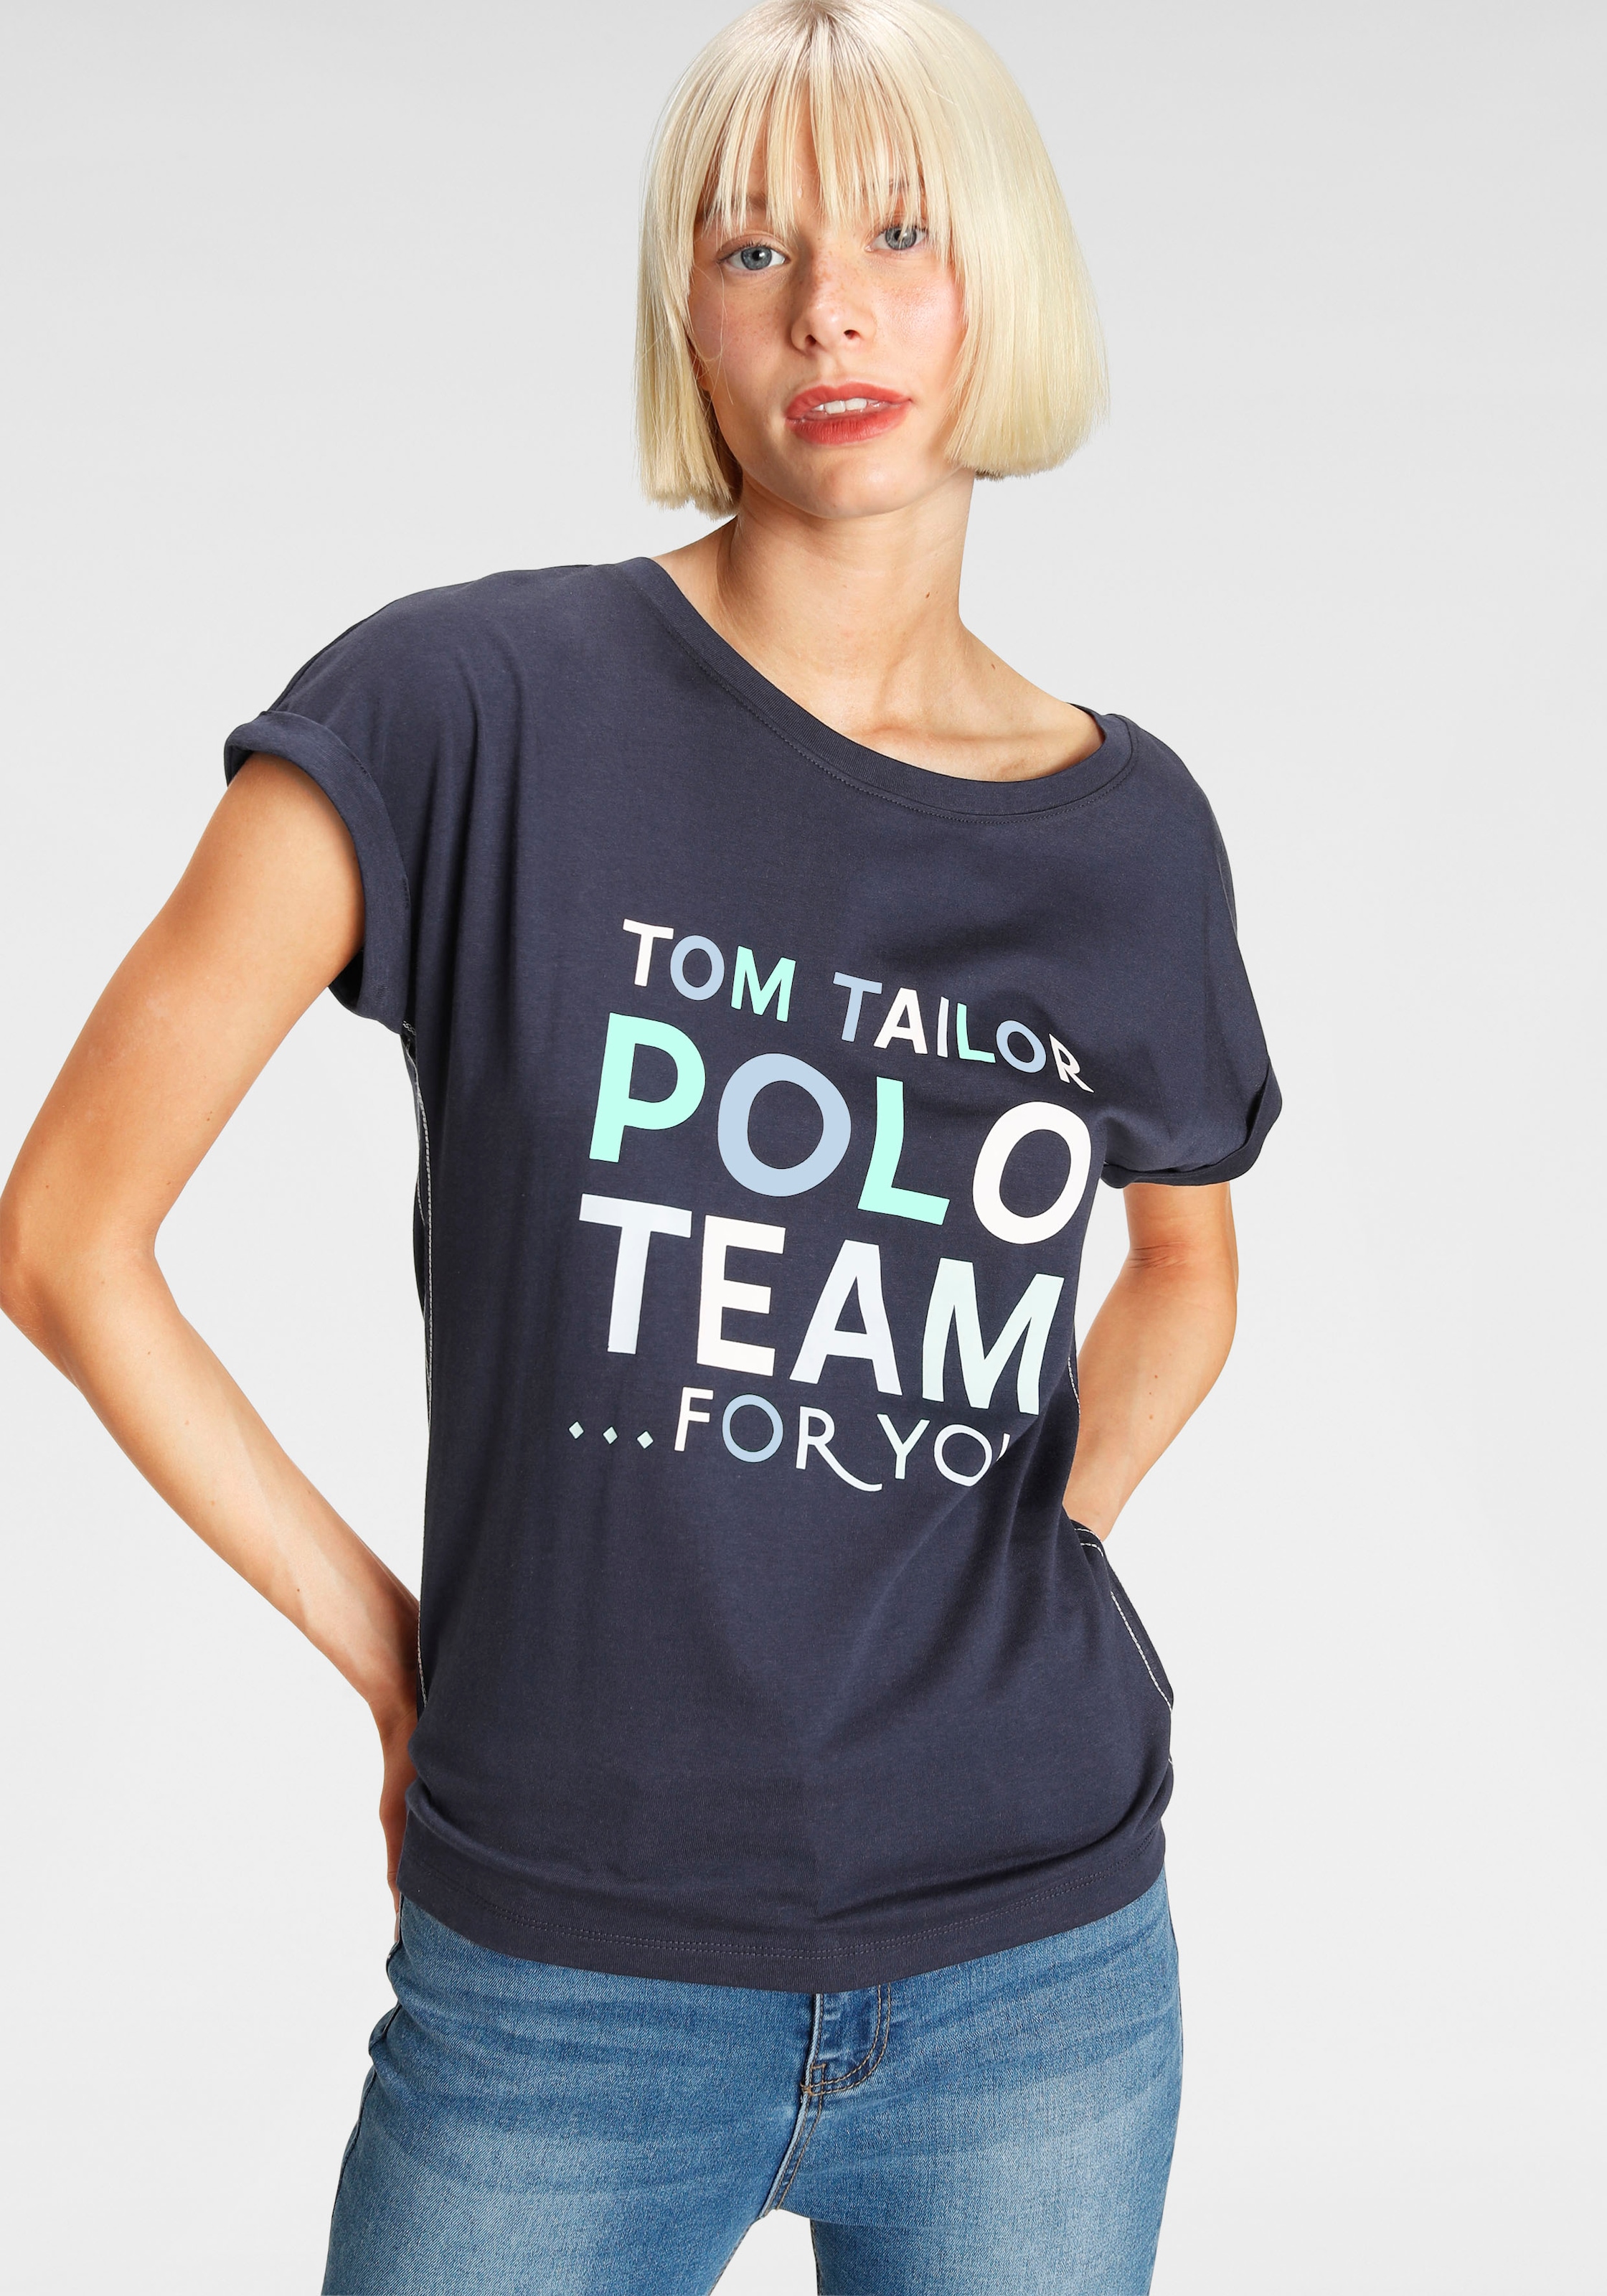 TOM TAILOR Polo Team bestellen Print-Shirt, | farbenfrohen BAUR großem Logo-Print